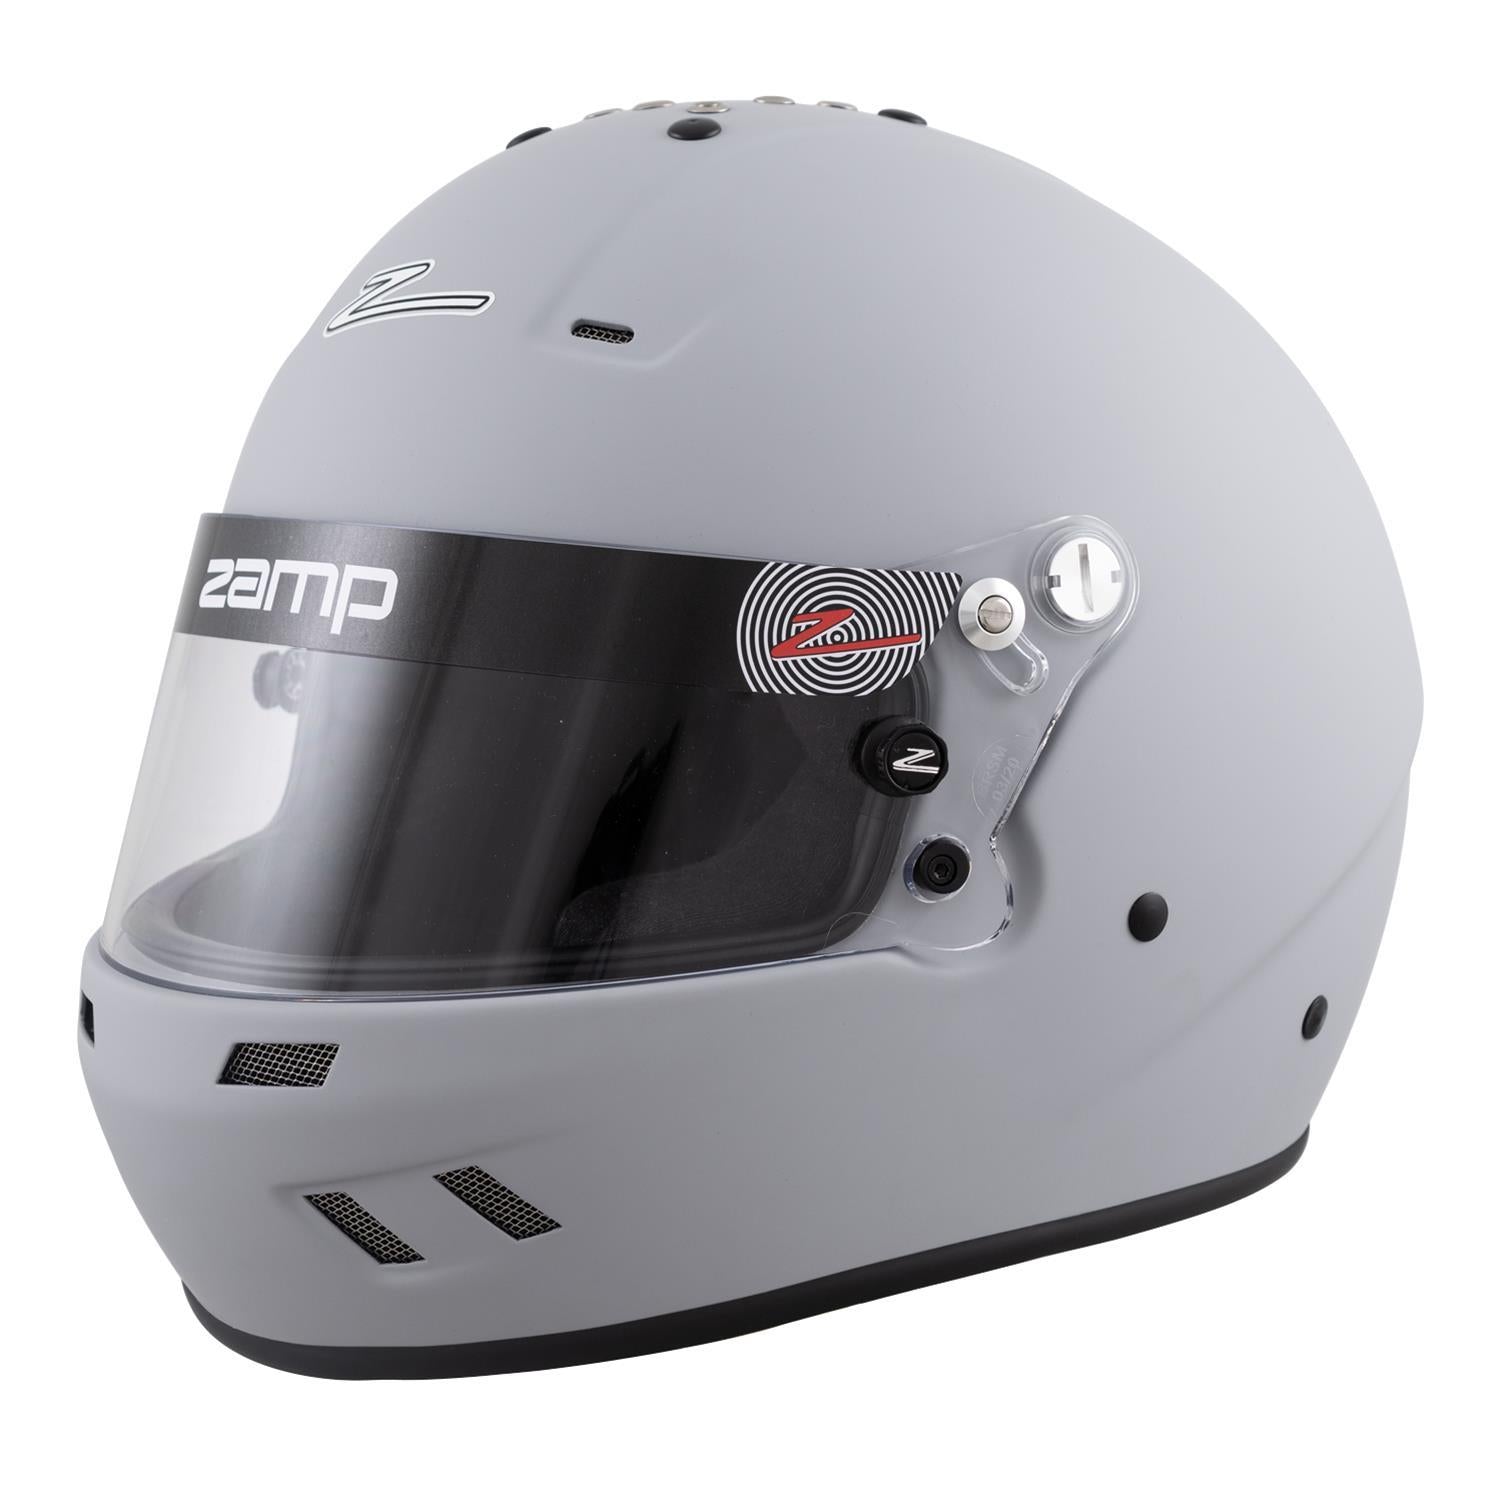 Zamp Solar Helmet RZ-59 XL Matte Gray SA2020 Helmets and Accessories Helmets main image